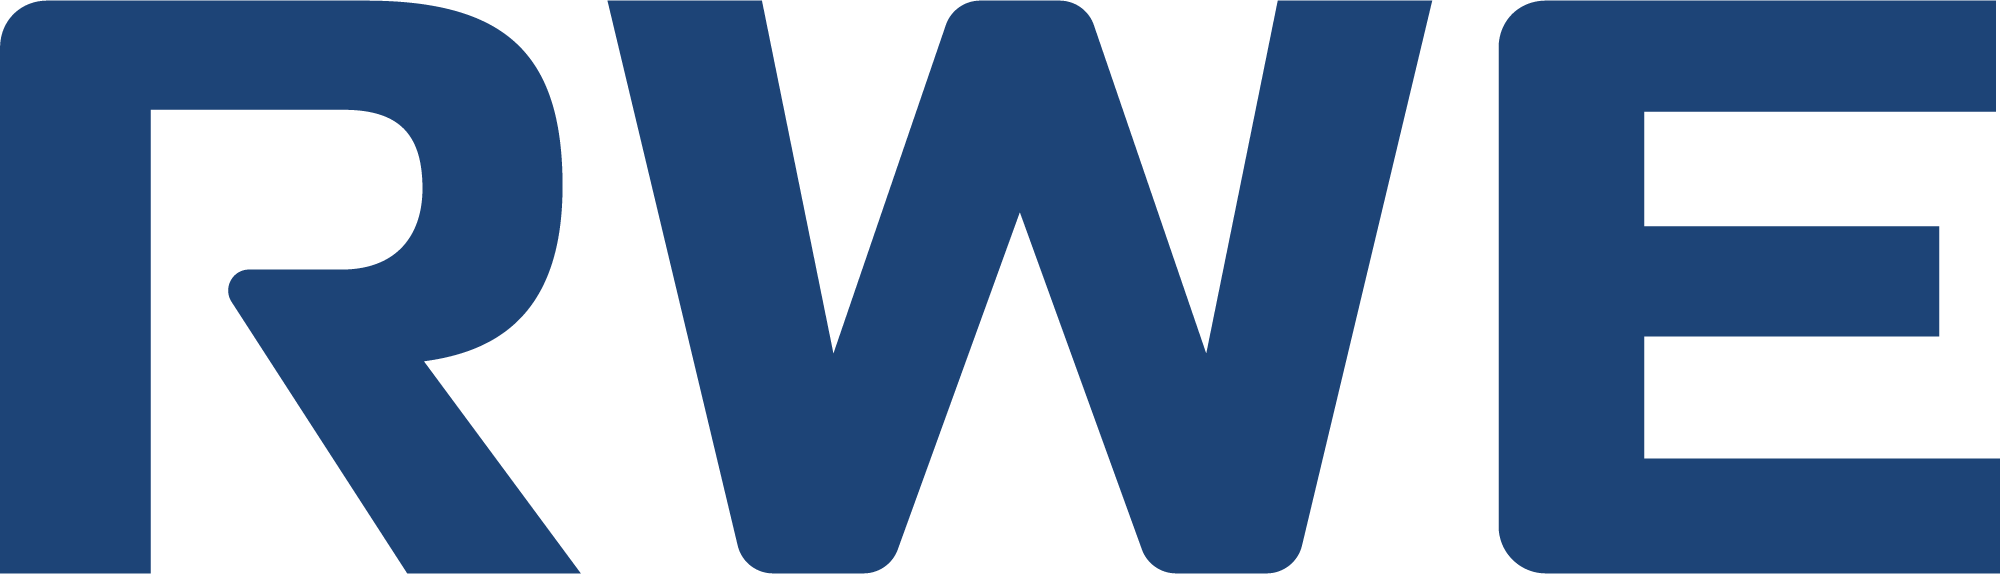 RWE_Logo-2019_Blue_sRGB.png